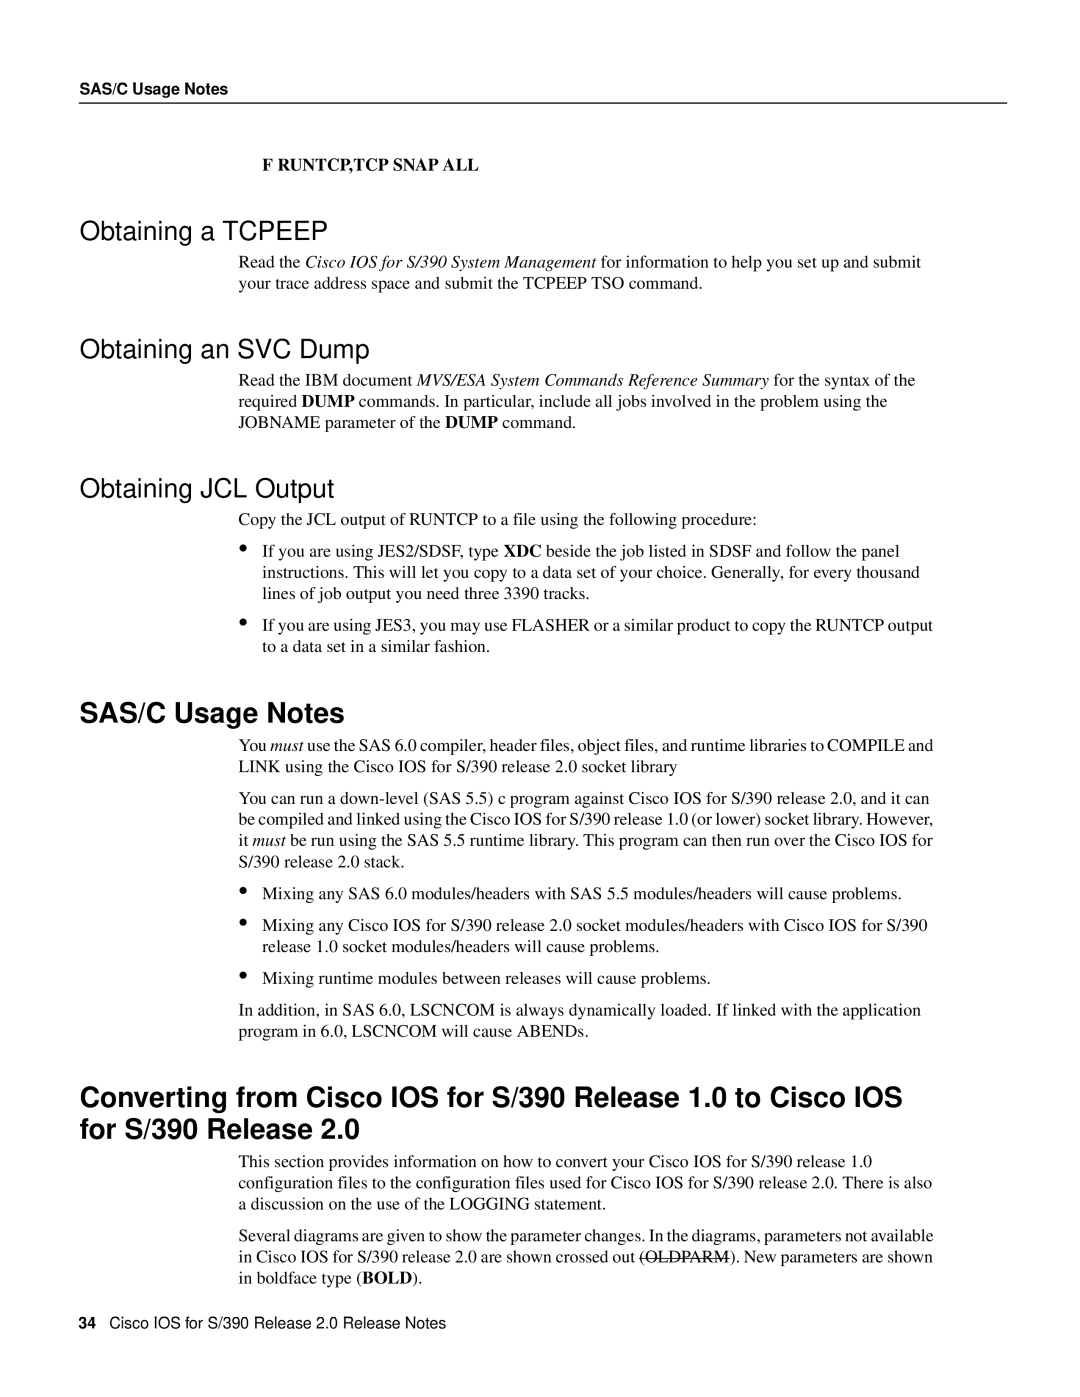 Cisco Systems S/390 manual SAS/C Usage Notes, Obtaining a TCPEEP, Obtaining an SVC Dump, Obtaining JCL Output 